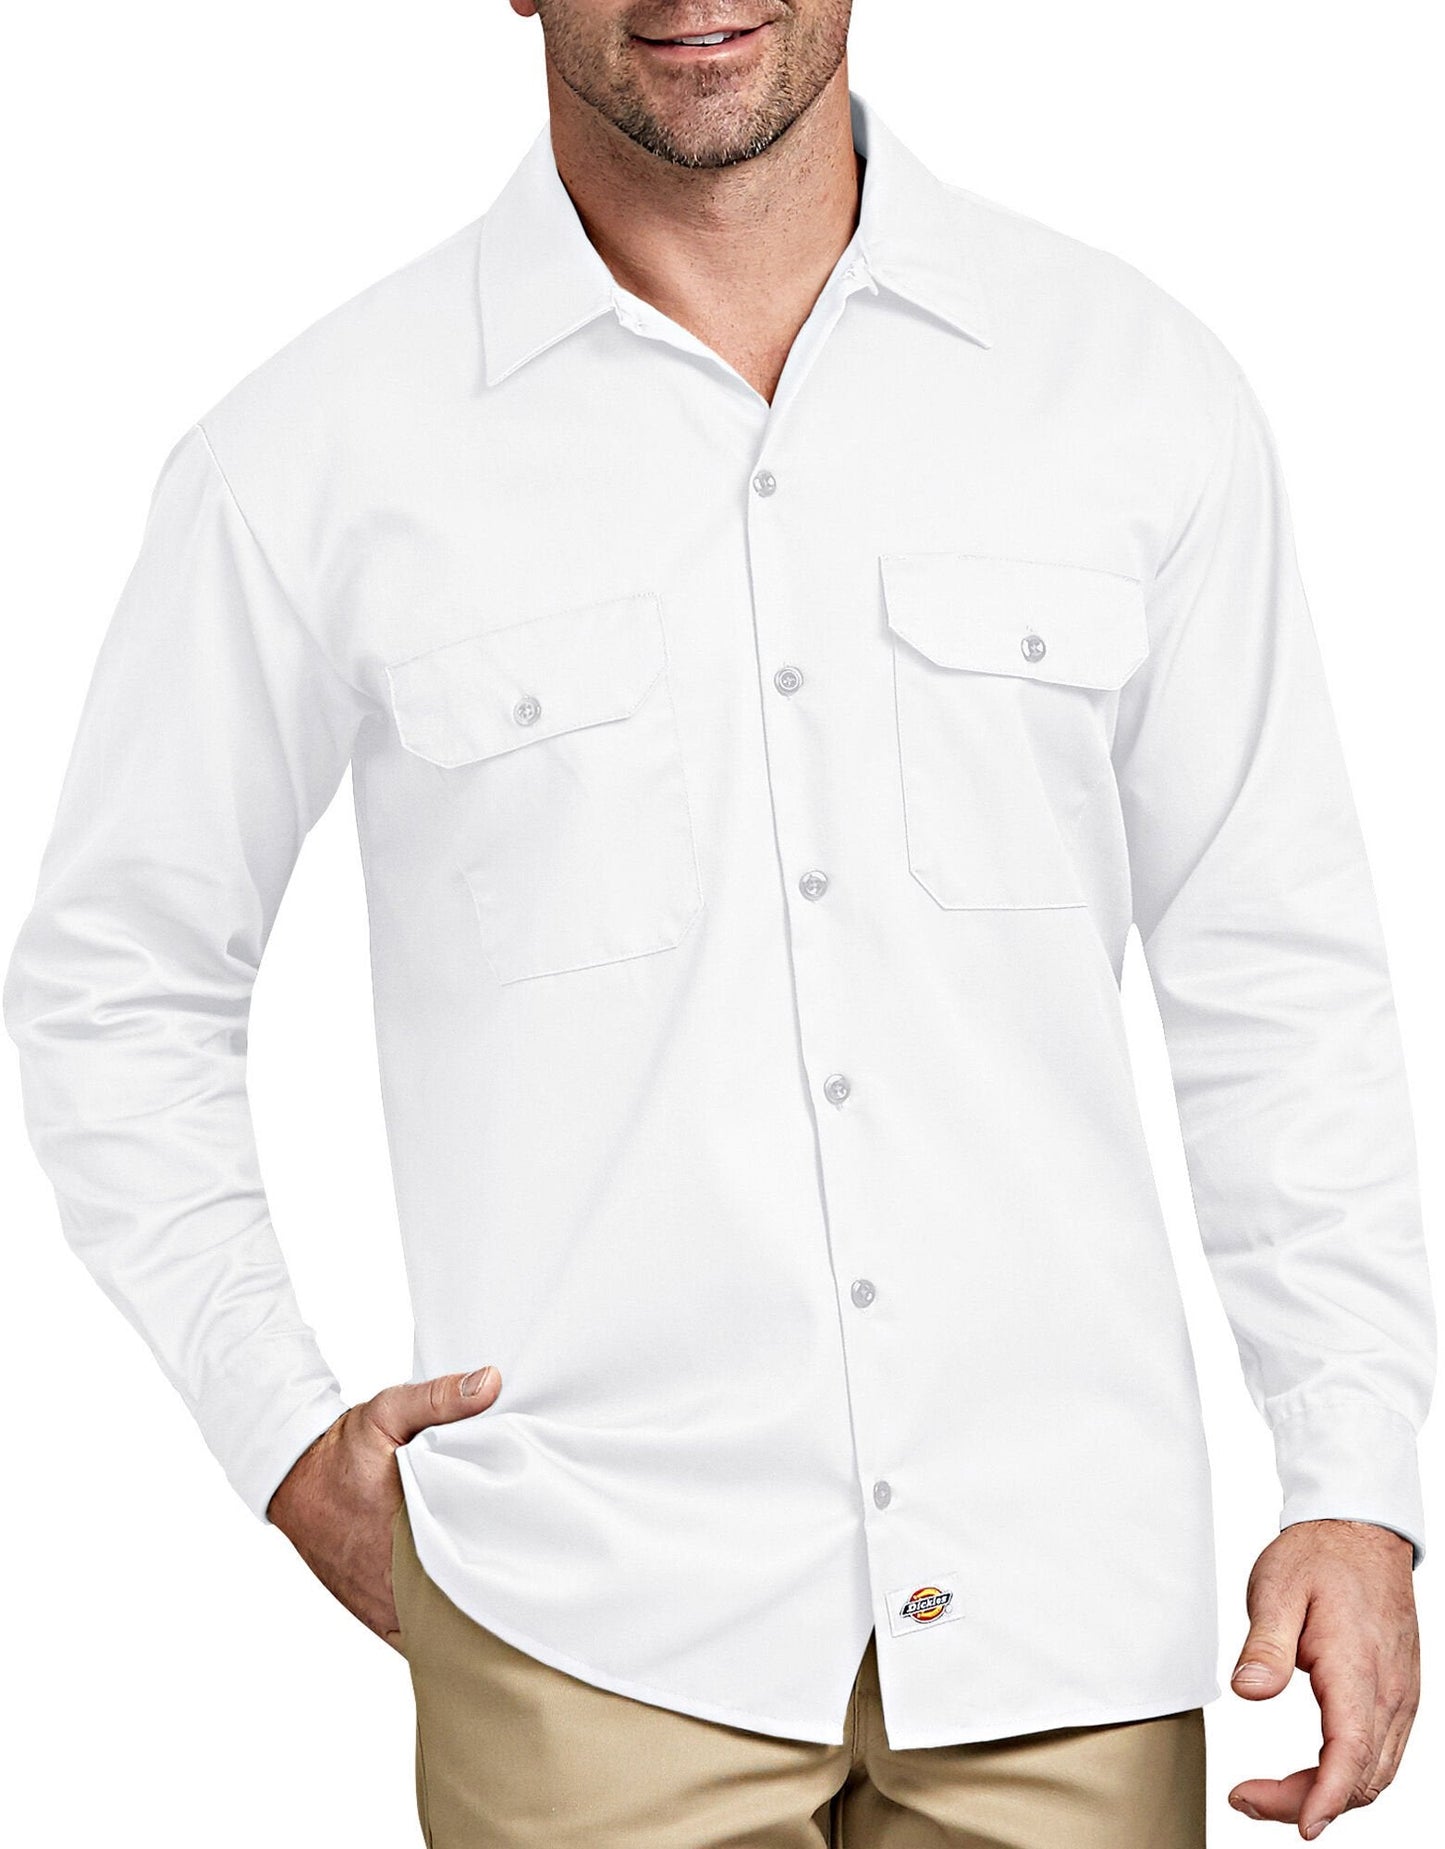 Long Sleeve Work Shirt, White